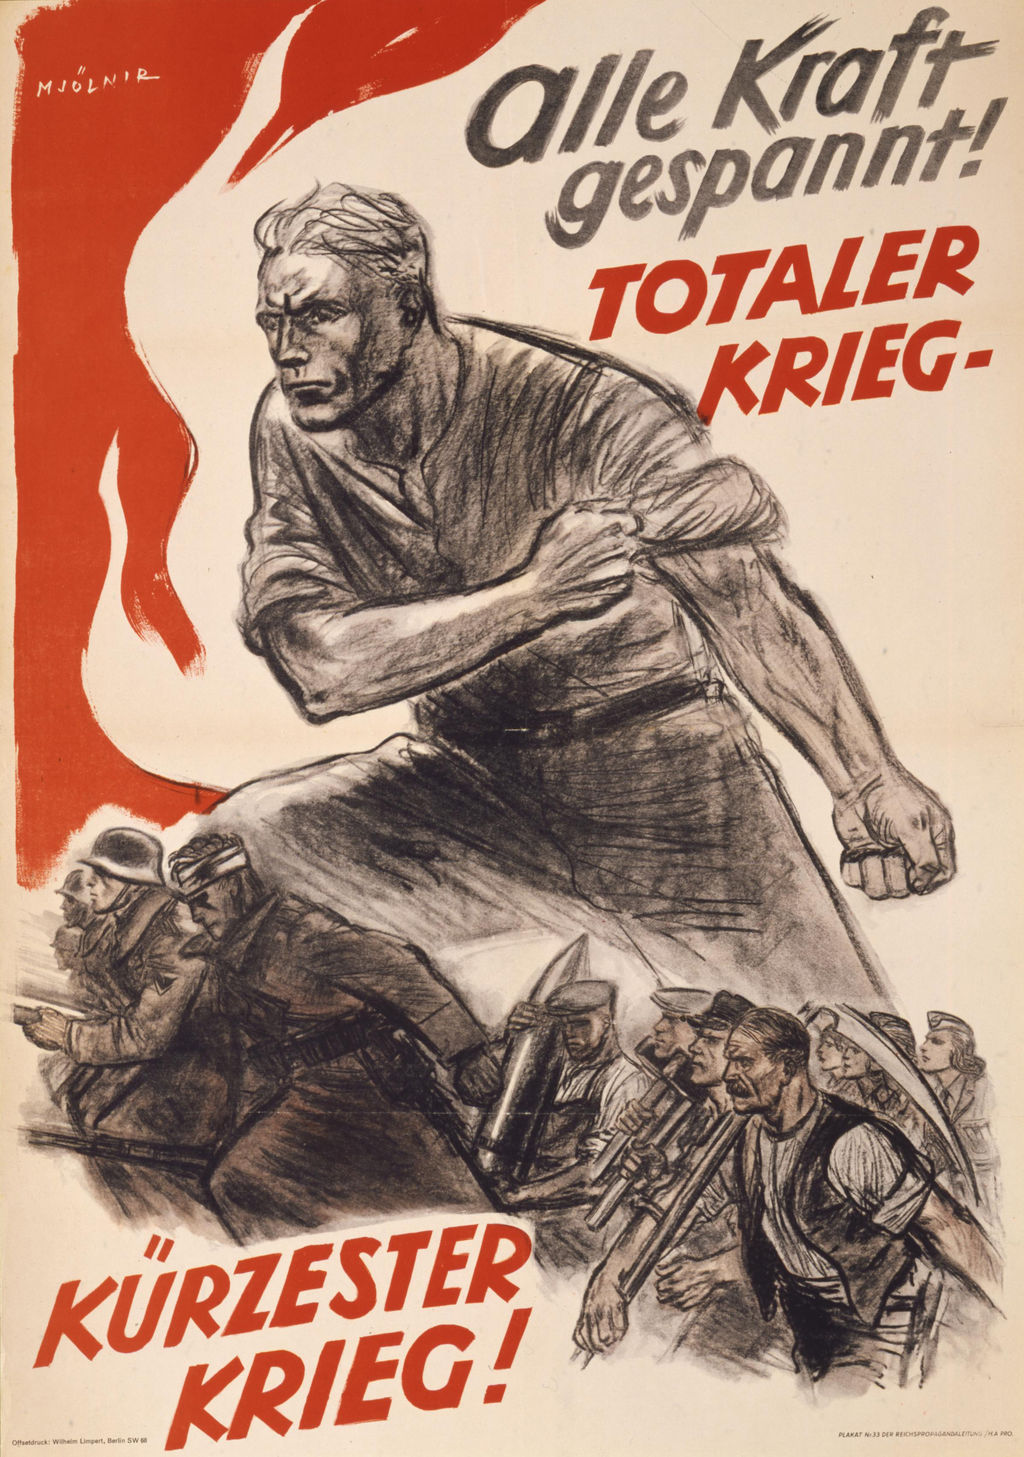 Exponat: Plakat: Alle Kraft gespannt! Totaler Krieg - Kürzester Krieg!, 1943/44